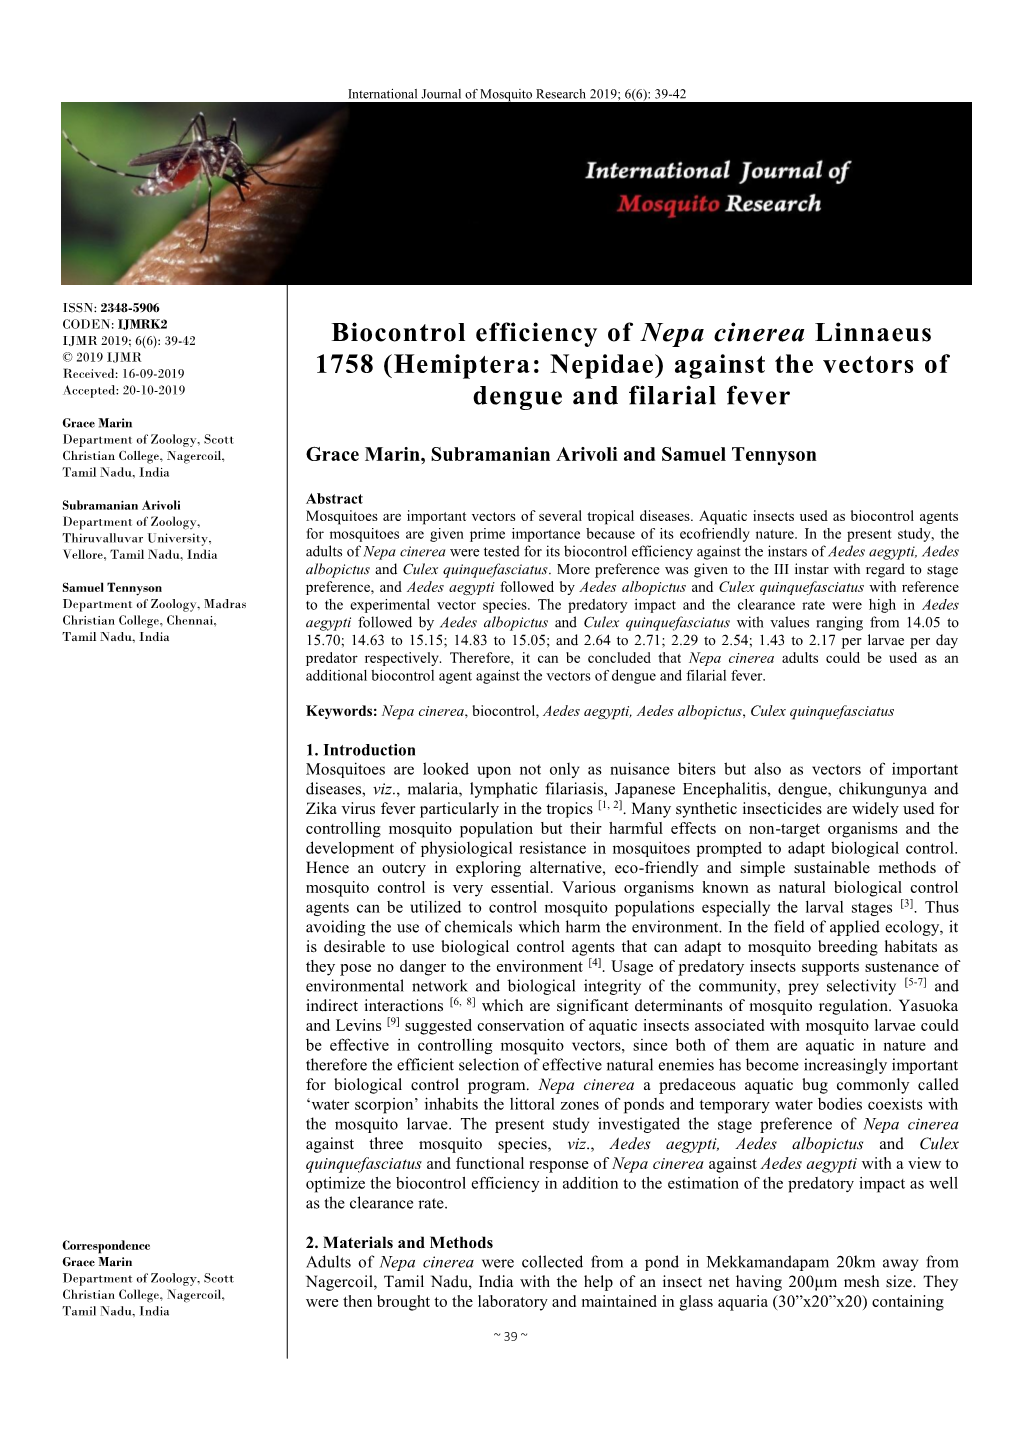 Biocontrol Efficiency of Nepa Cinerea Linnaeus 1758 (Hemiptera